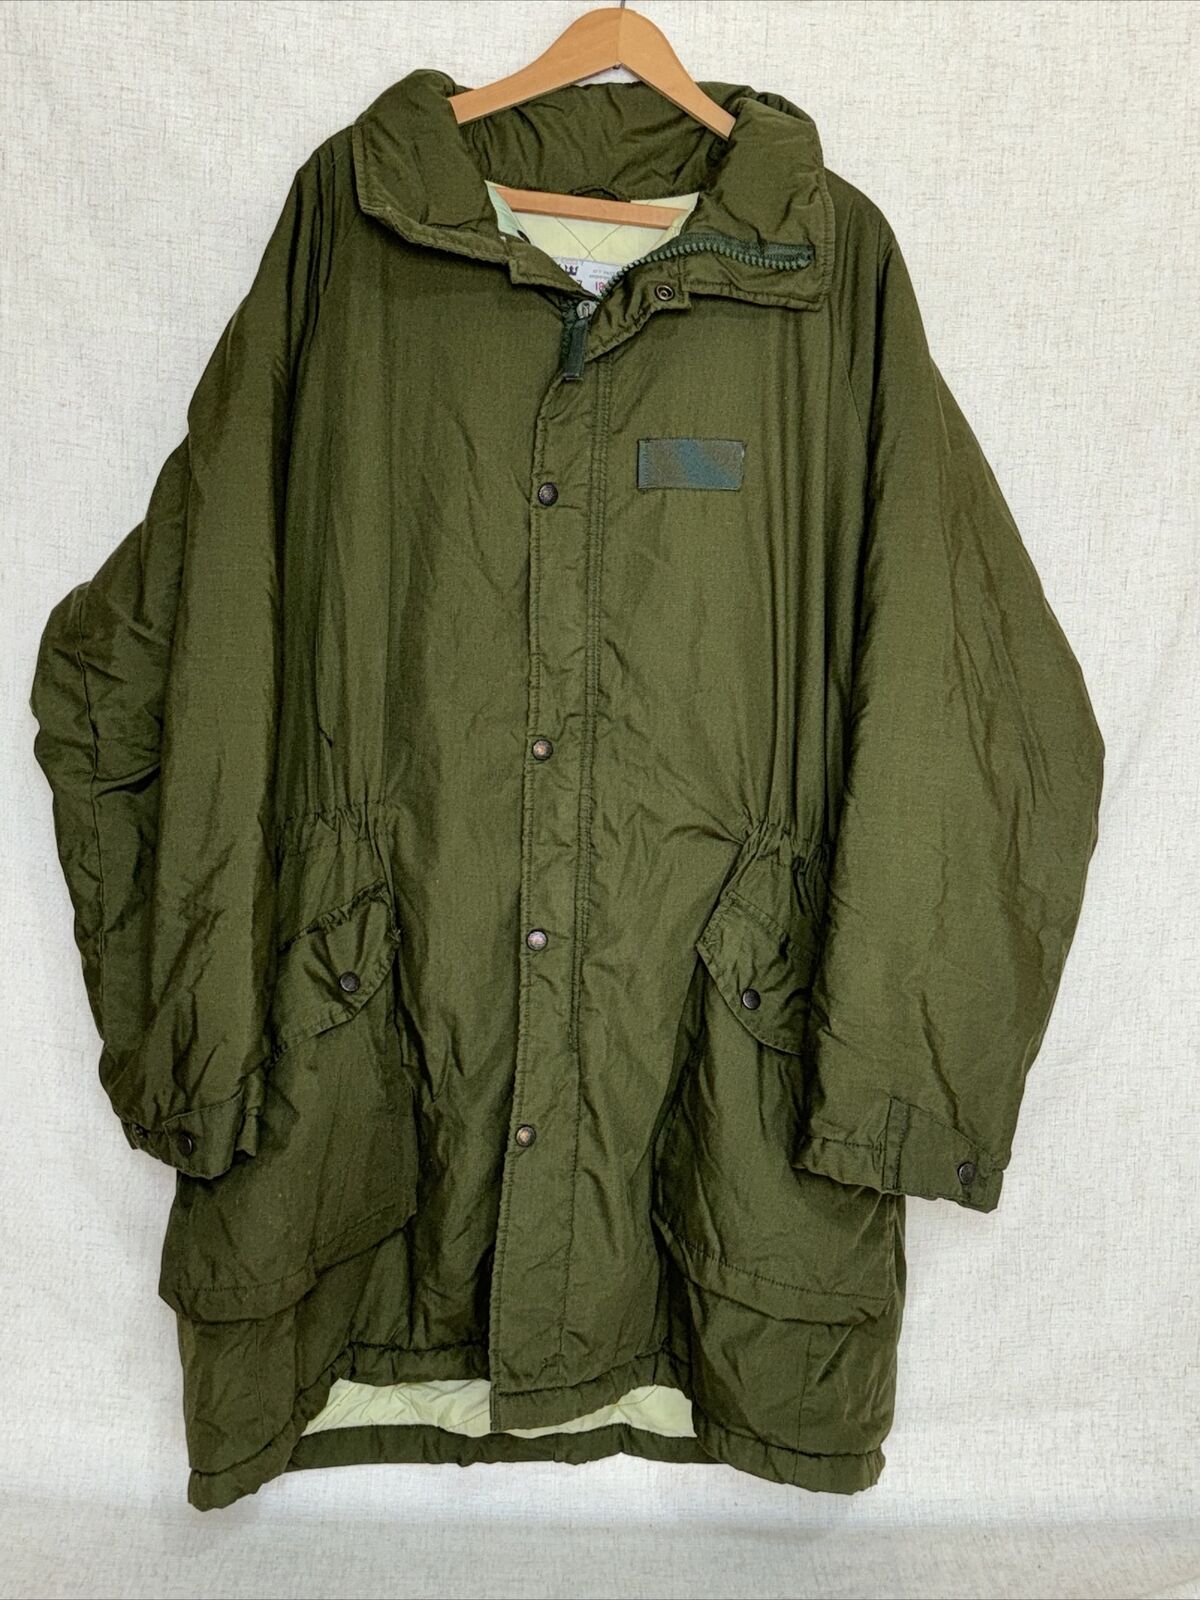 VTG Swedish Army 1997 Coat 180 / 95 Cold Weather Parka Green Hood M7360-020000-3